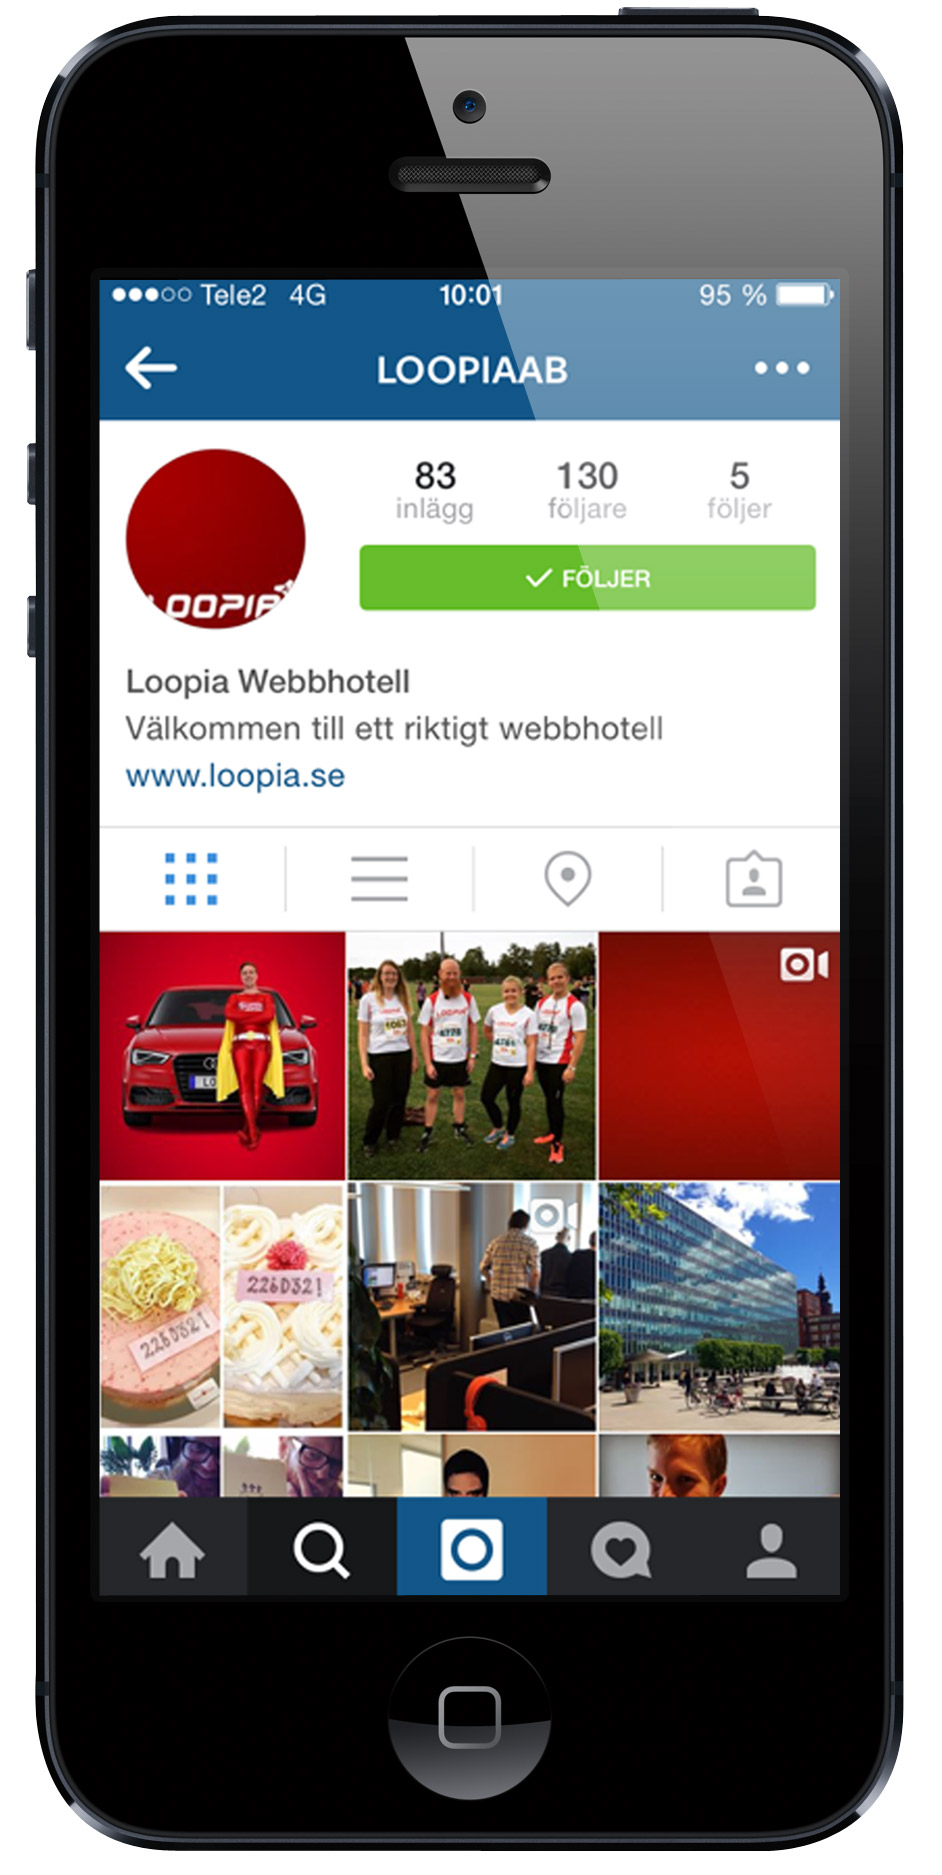 Loopia på Instagram - på svensk.